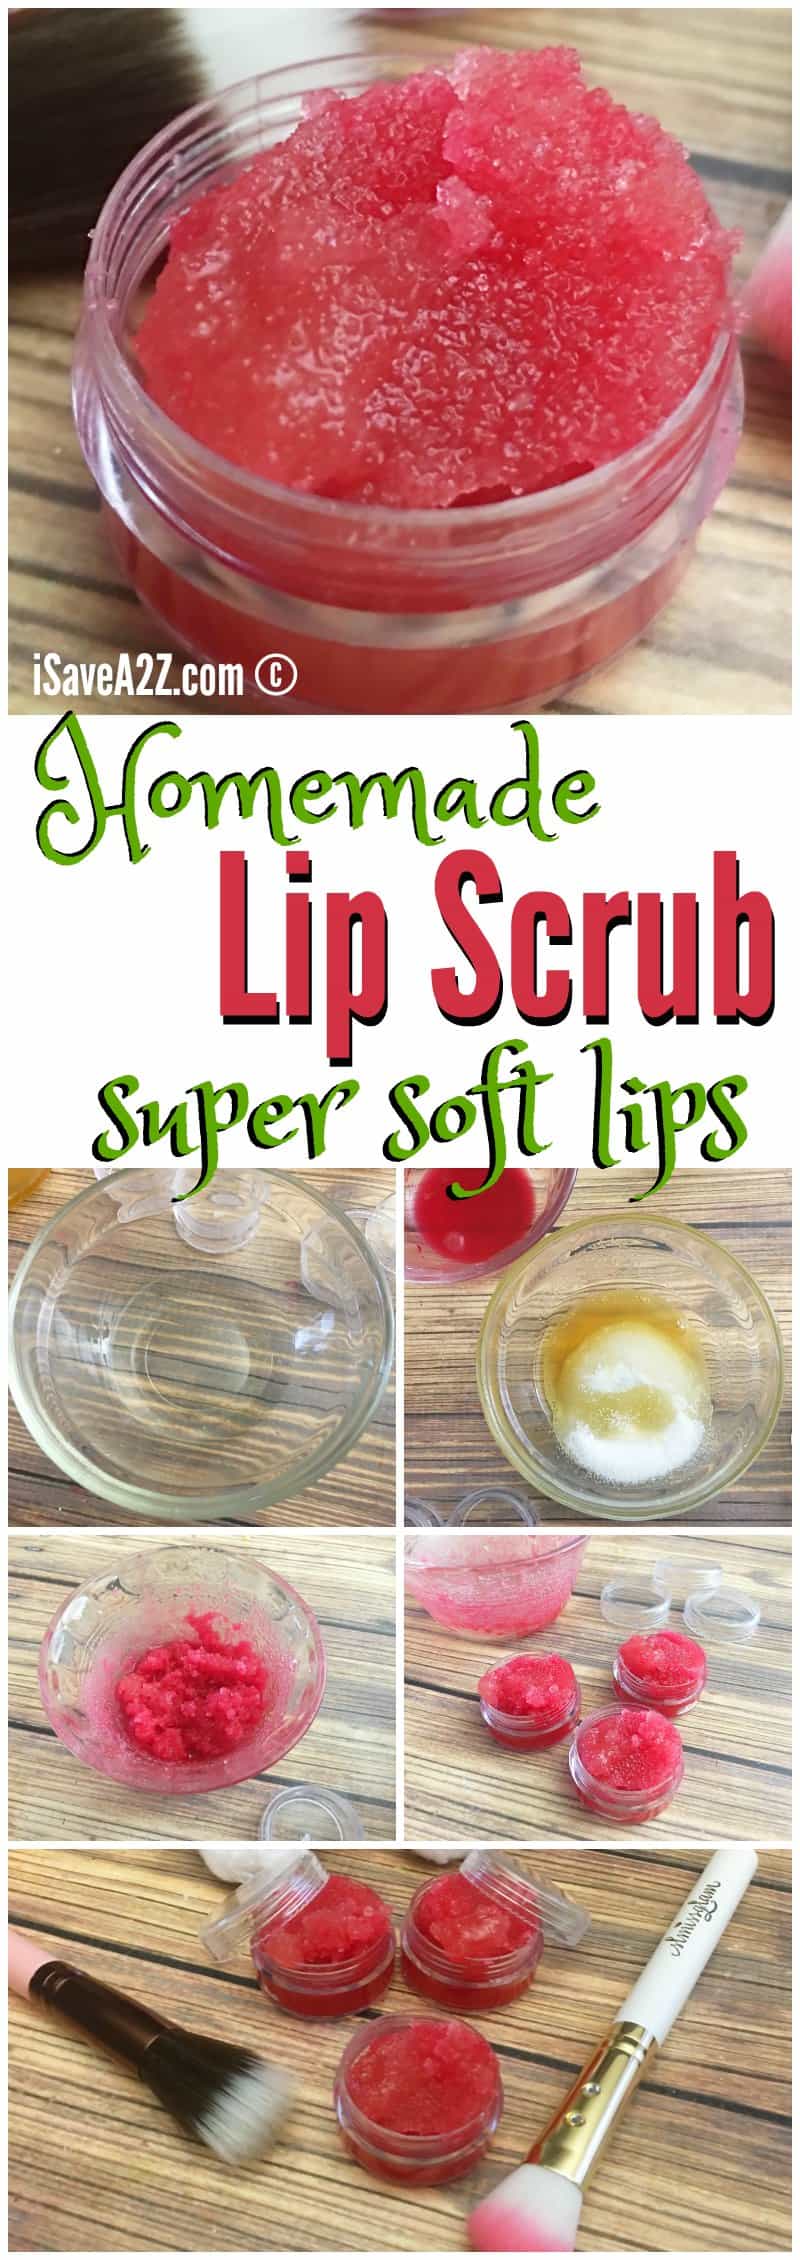 Lip scrub homemade